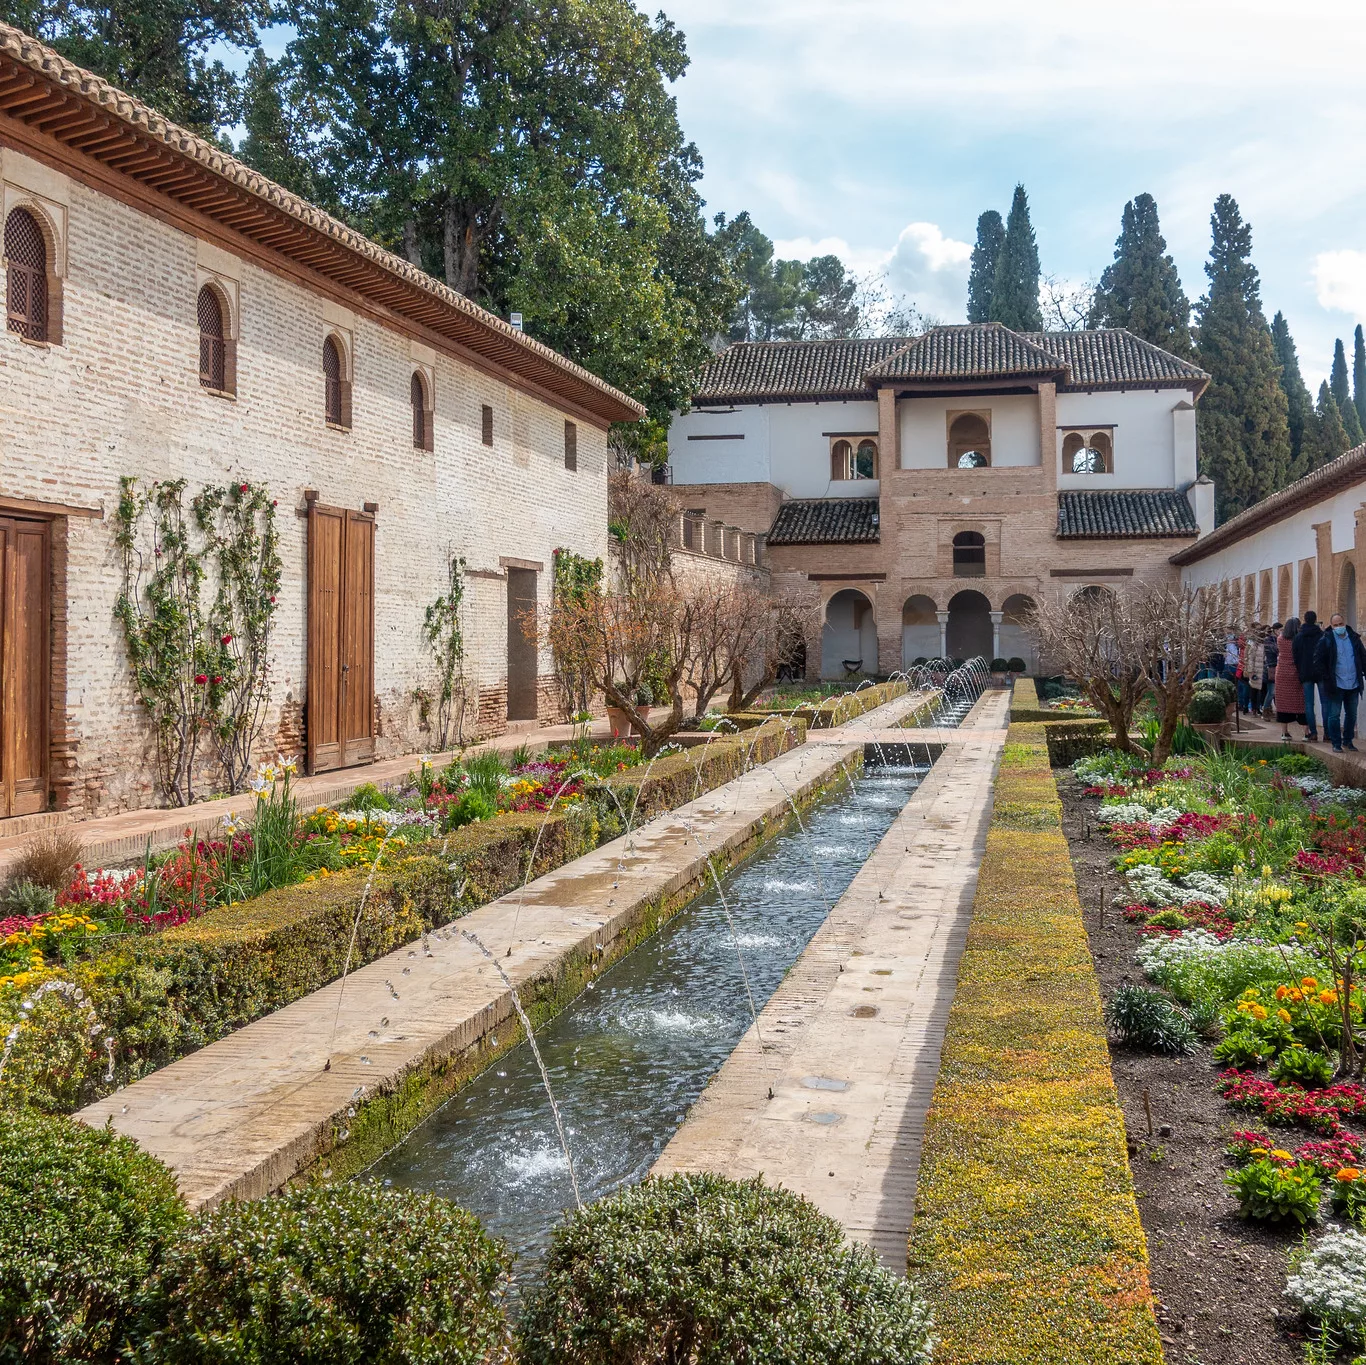 Visiting The Alhambra In Granada Spain